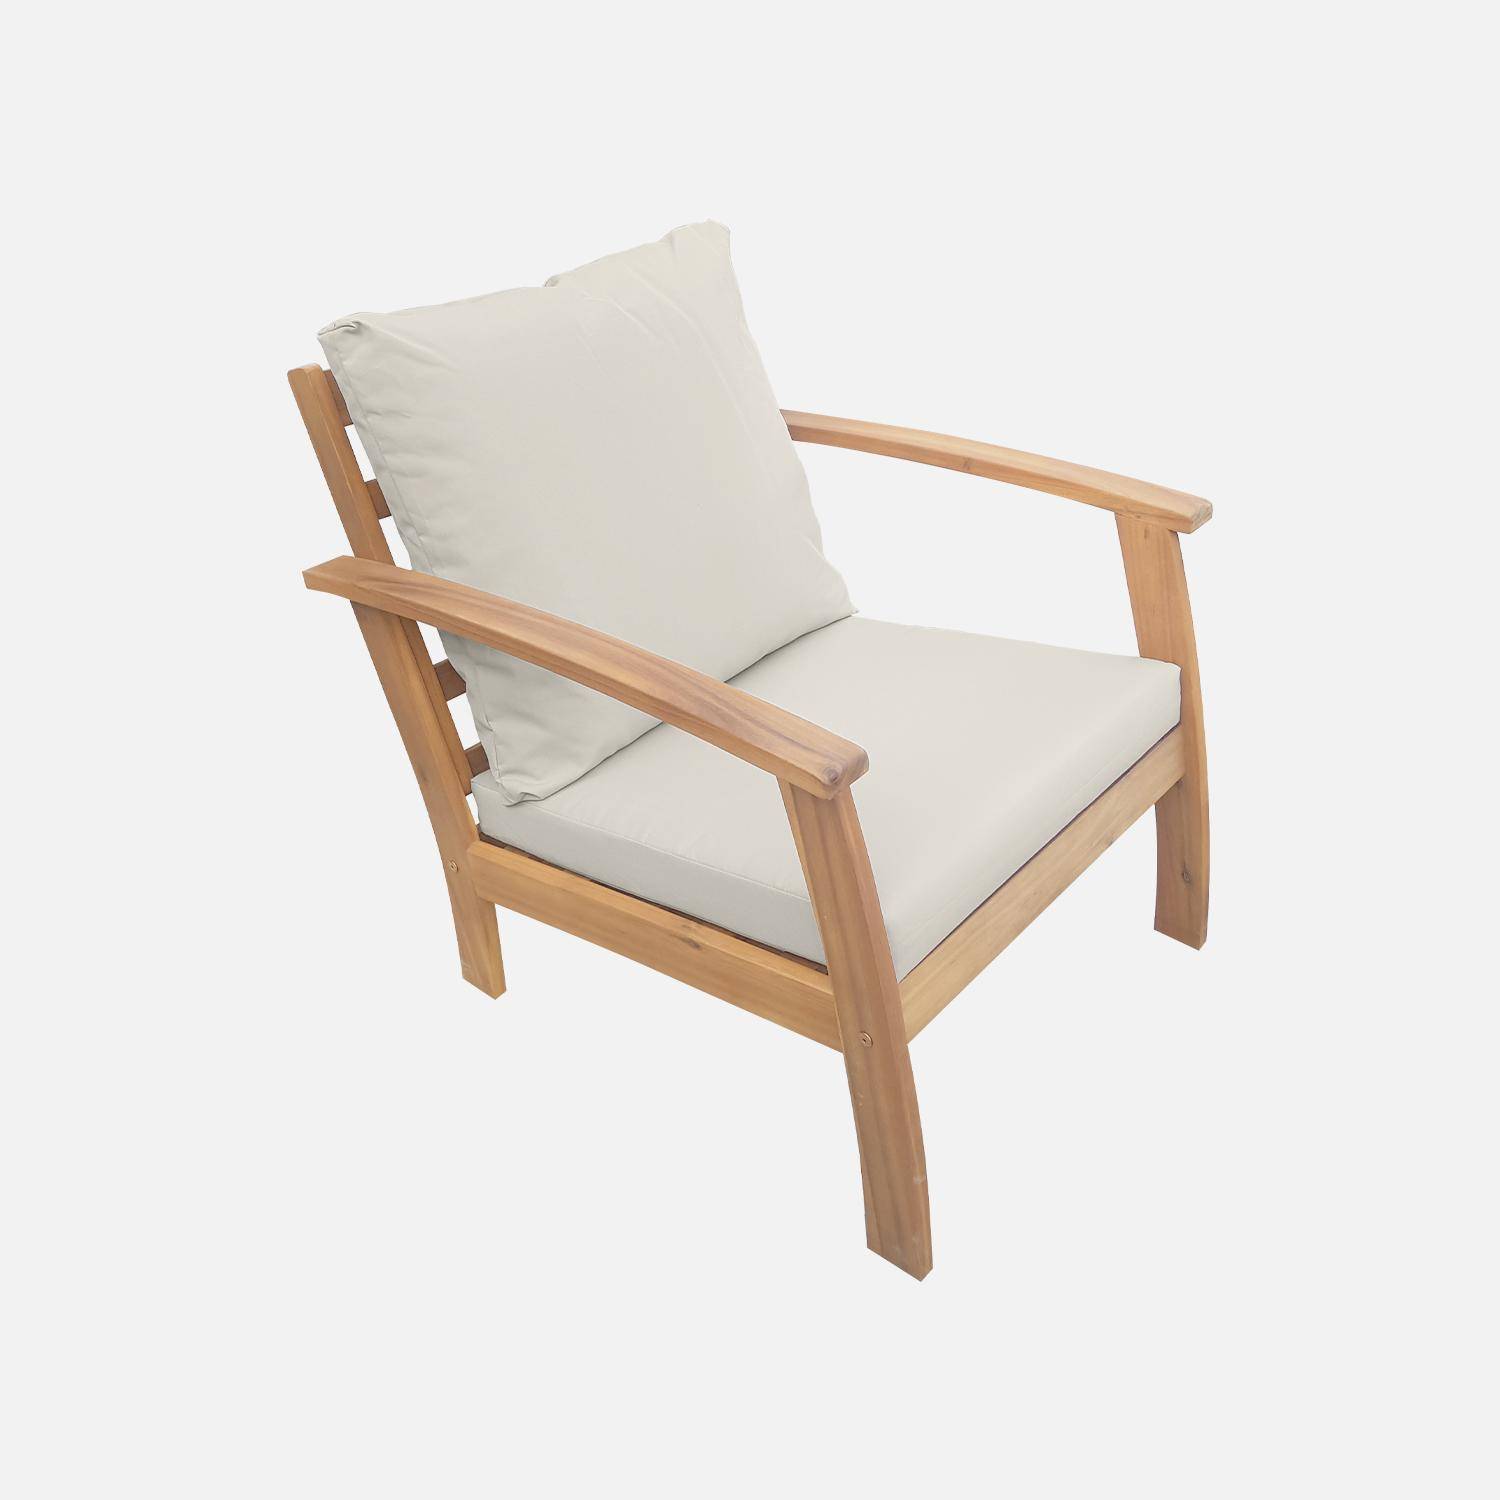 4-seater wooden garden sofa - Acacia wood sofa, armchairs and coffee table, designer piece  - Ushuaia - Off-white,sweeek,Photo4